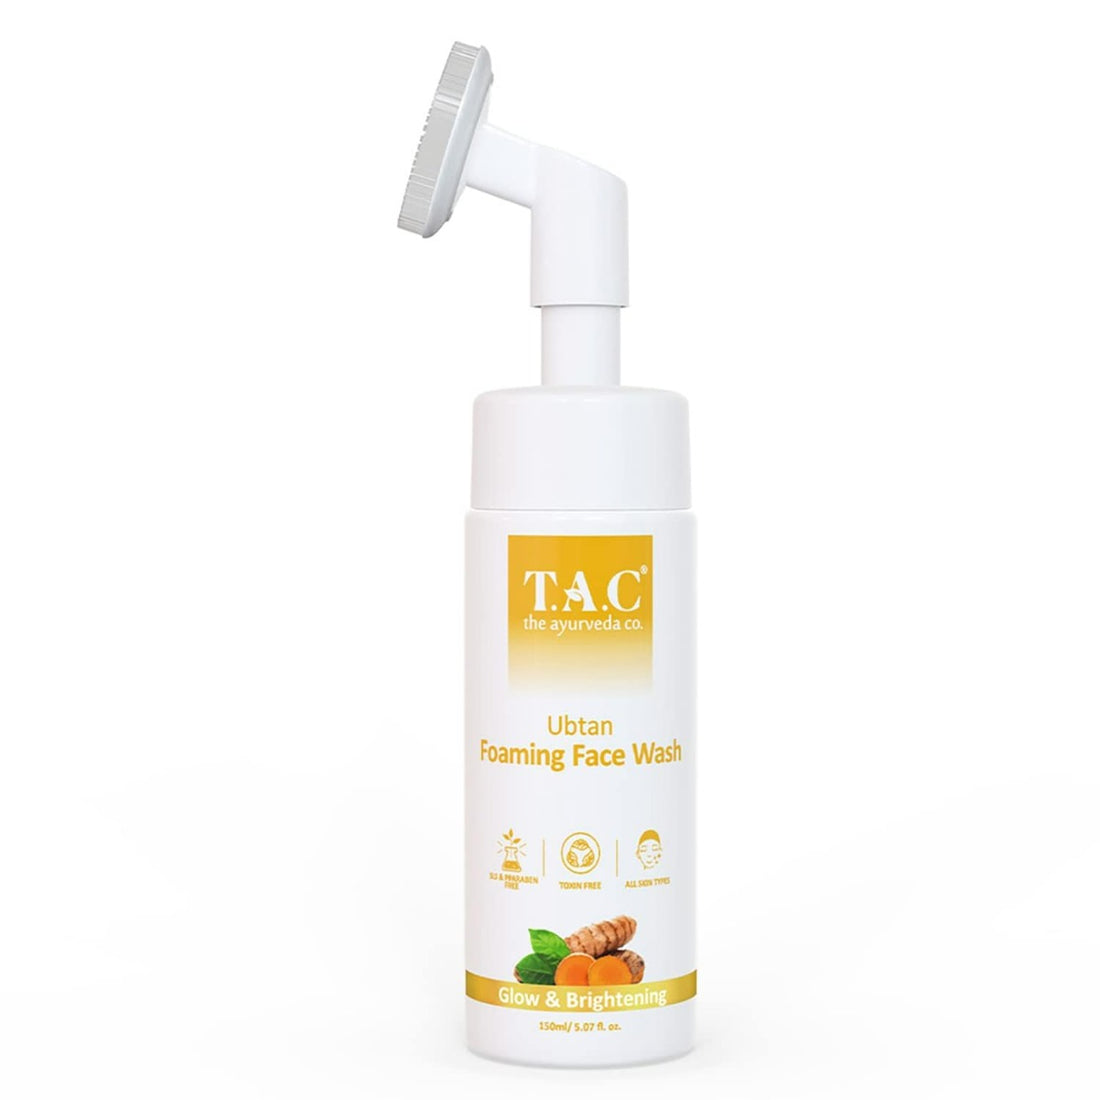 TAC - The Ayurveda Co. Ubtan Foaming Face Wash (150ml)